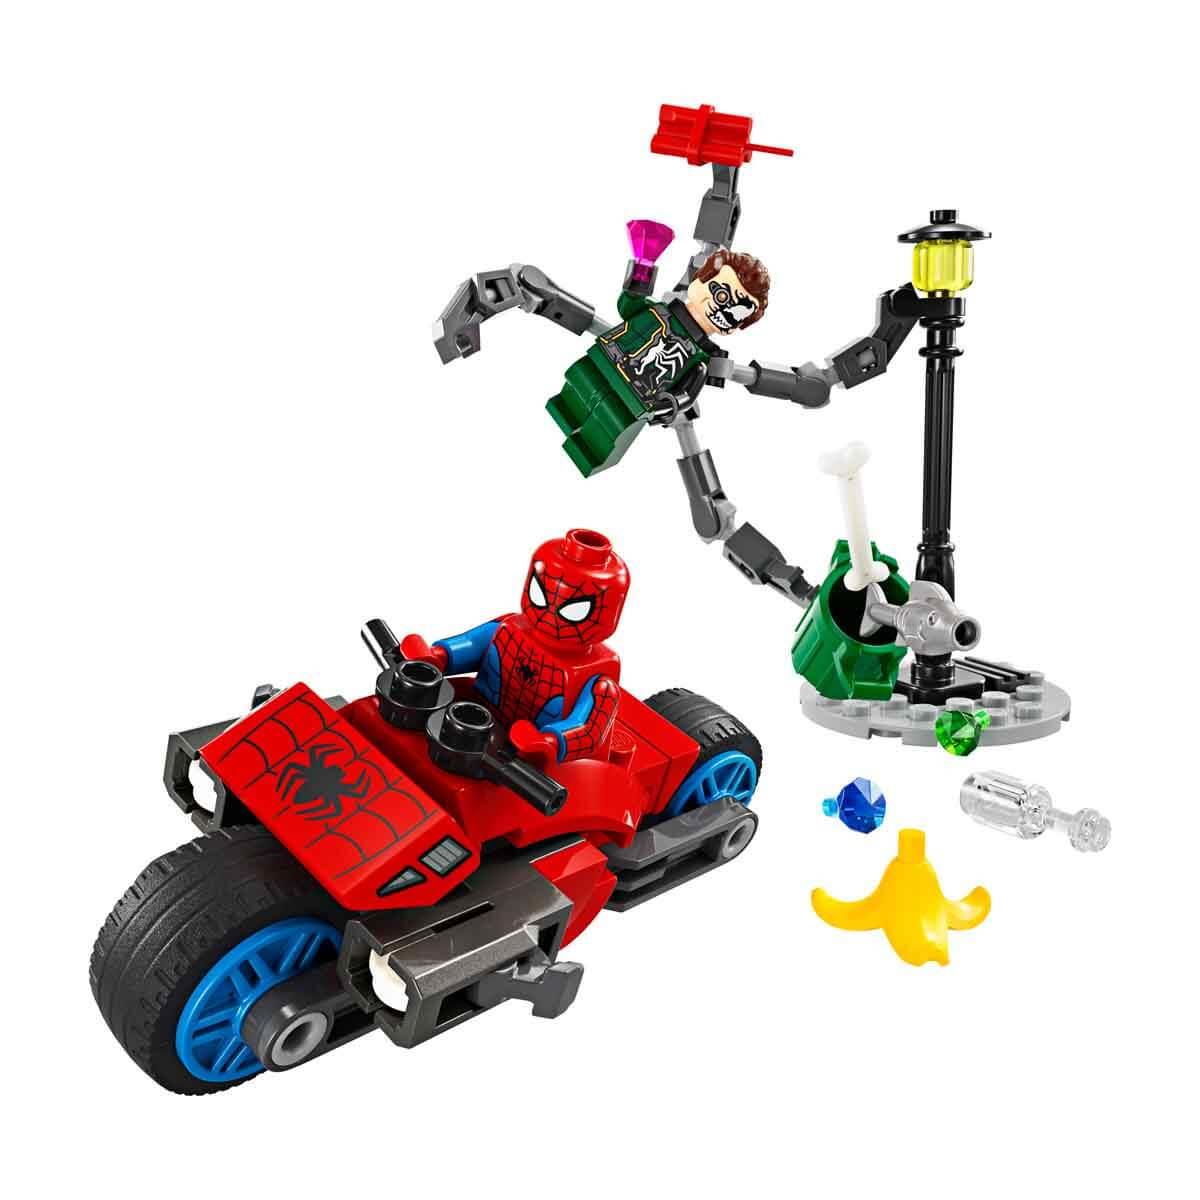 Lego Marvel Motosiklet Takibi: Örümcek Adam Doktor Oktopus'a Karşı 76275 | Toysall